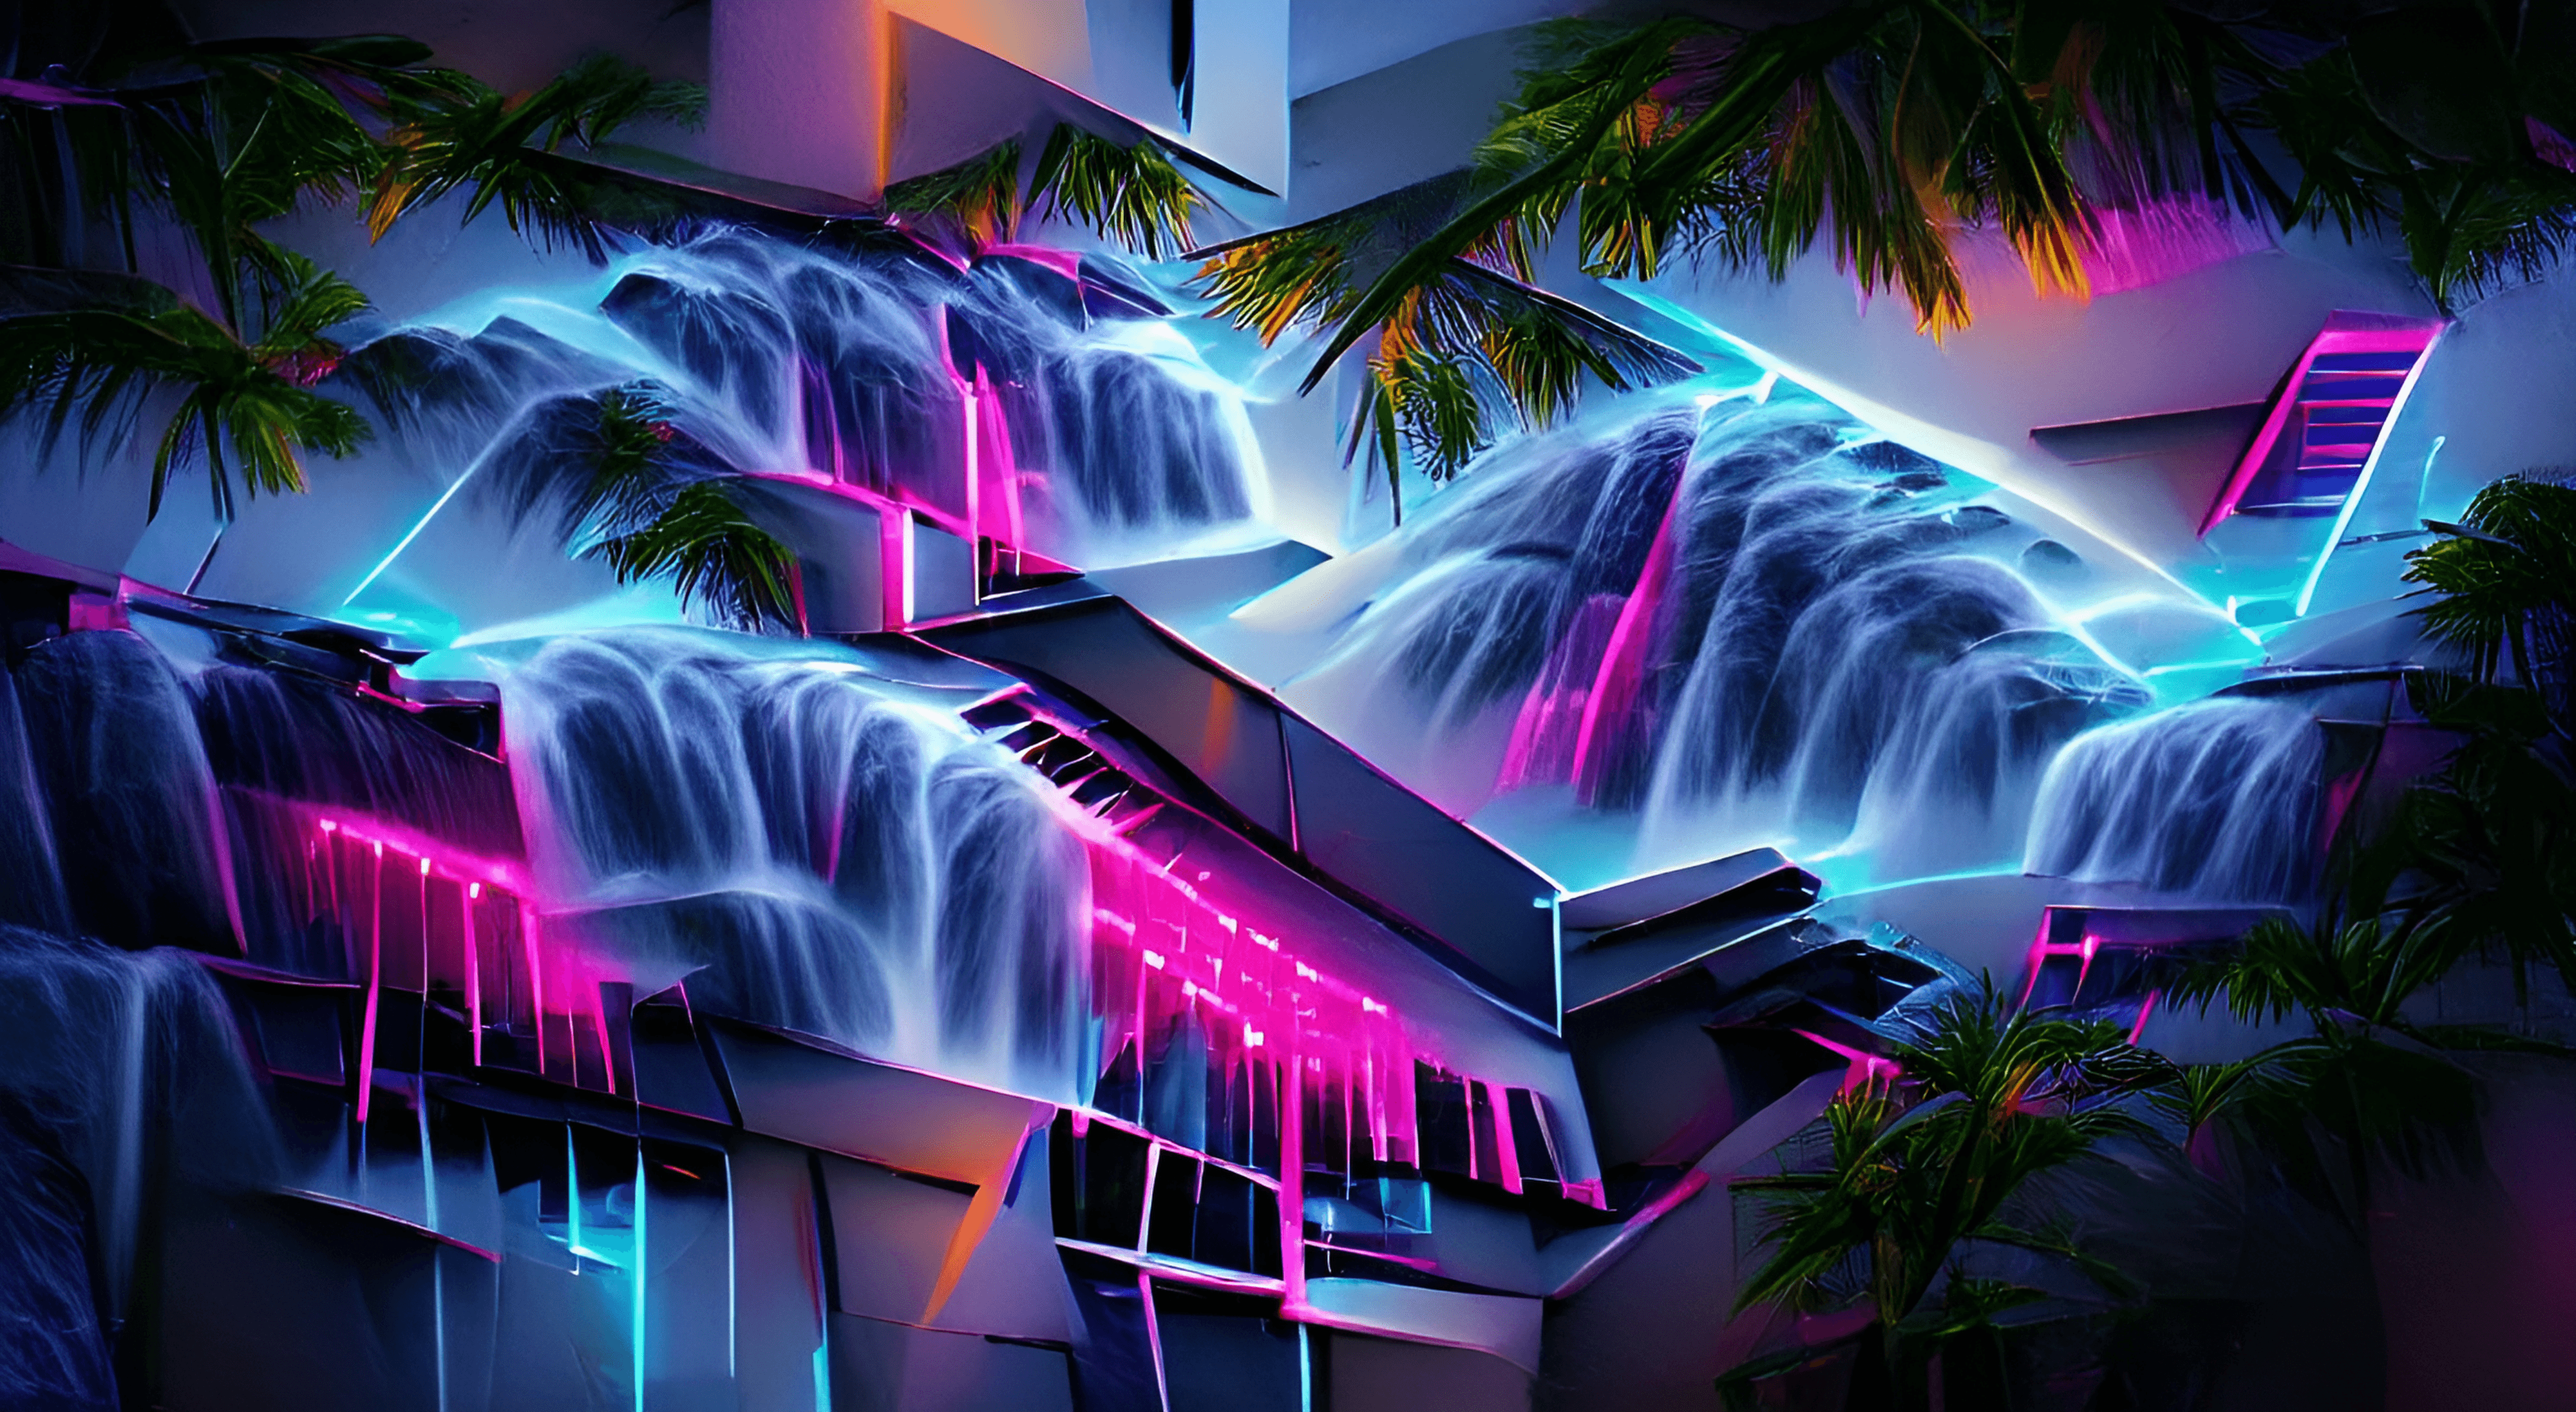 The Waterfall House